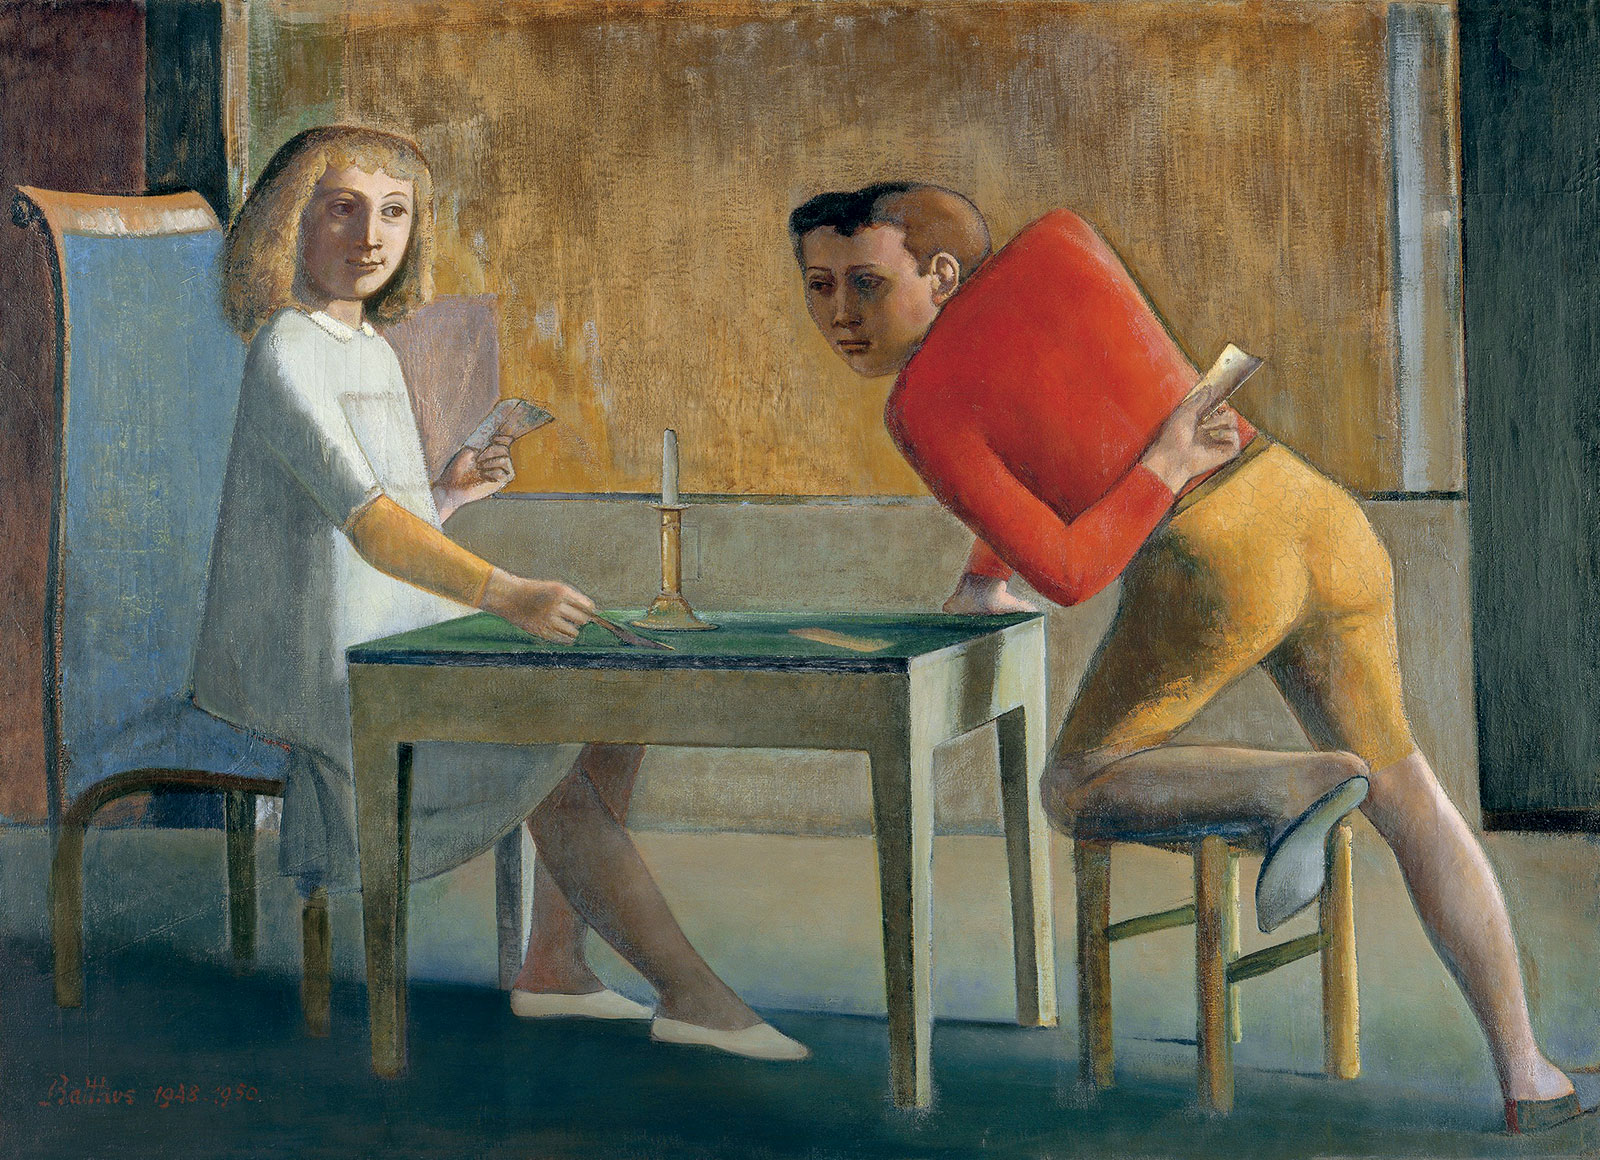 Balthazar Klossowski de Rola (Balthus), *La partida de naipes*, 1948. Museo Nacional Thyssen-Bornemisza